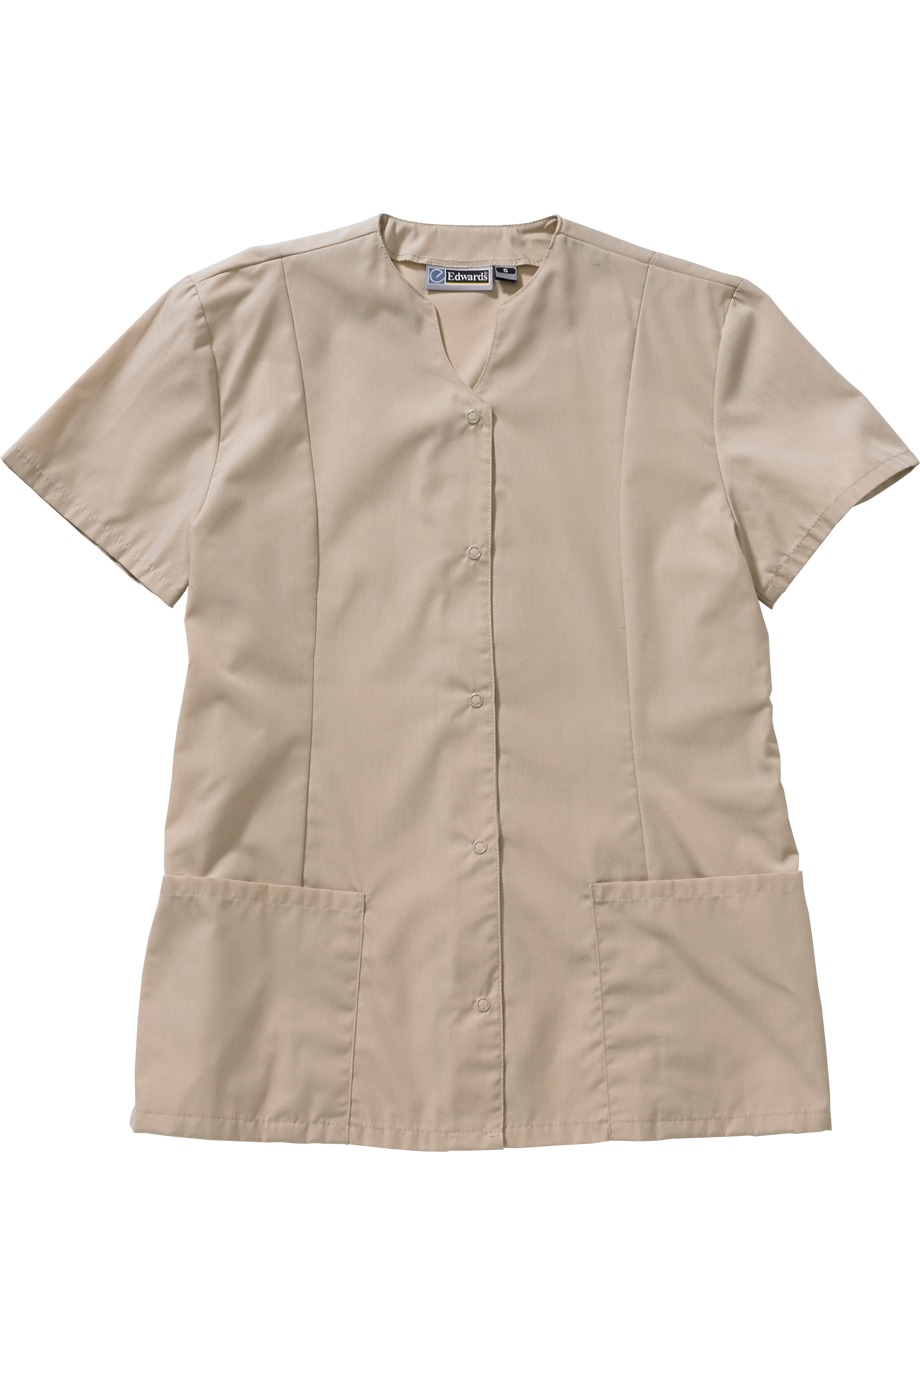 Edwards Garment 7889 - Scrub Zone Snap Front Tunic